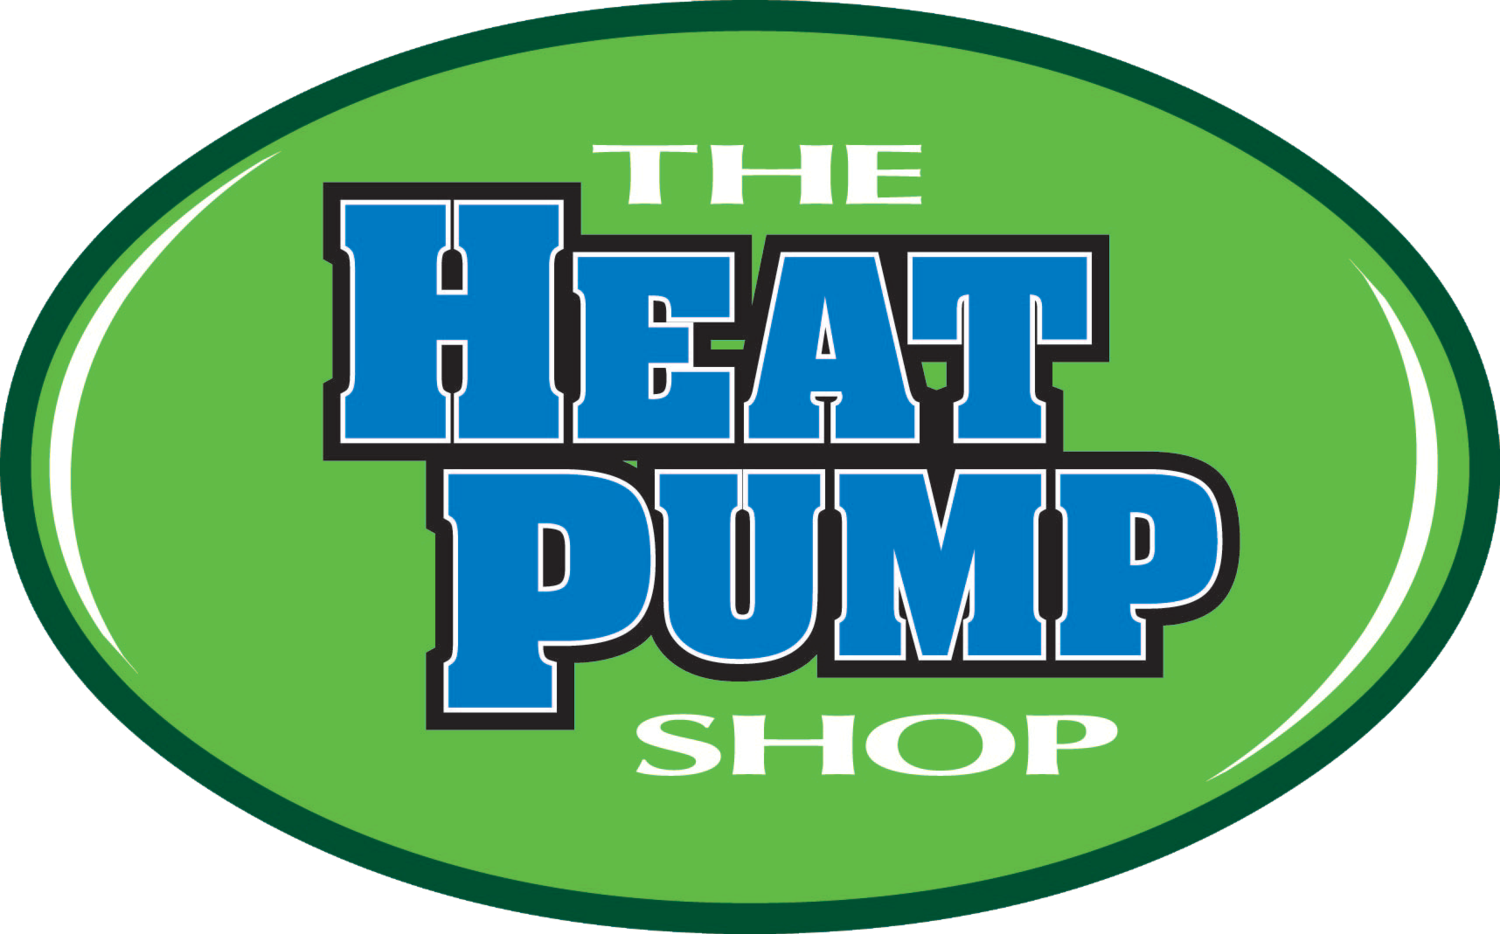 The Heat Pump Shop